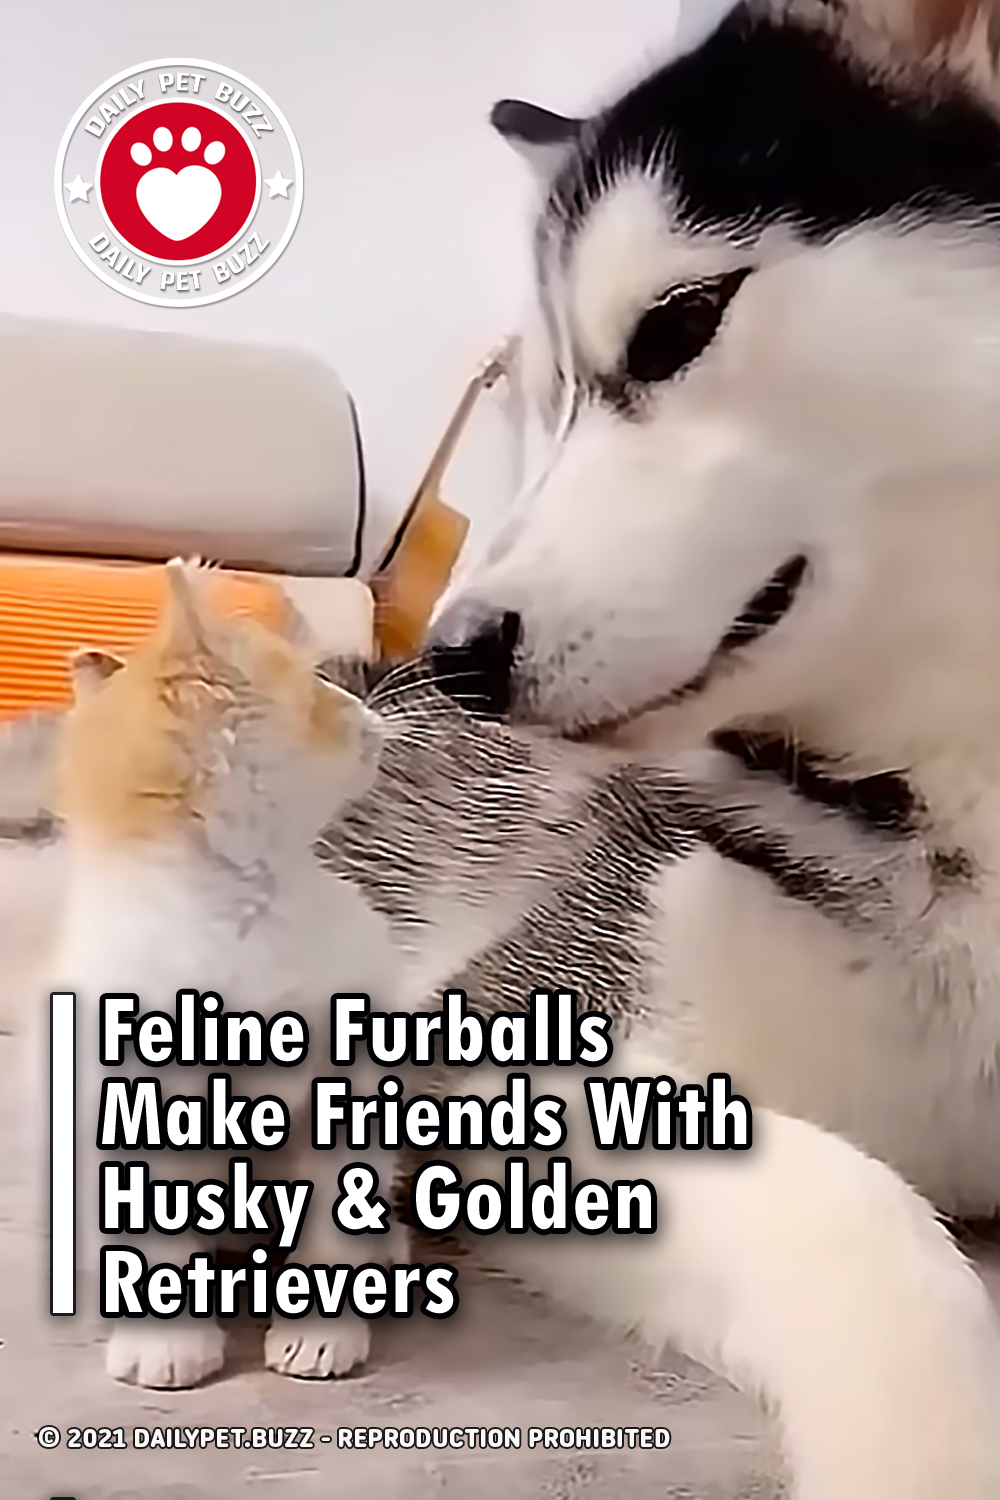 Feline Furballs Make Friends With Husky & Golden Retrievers